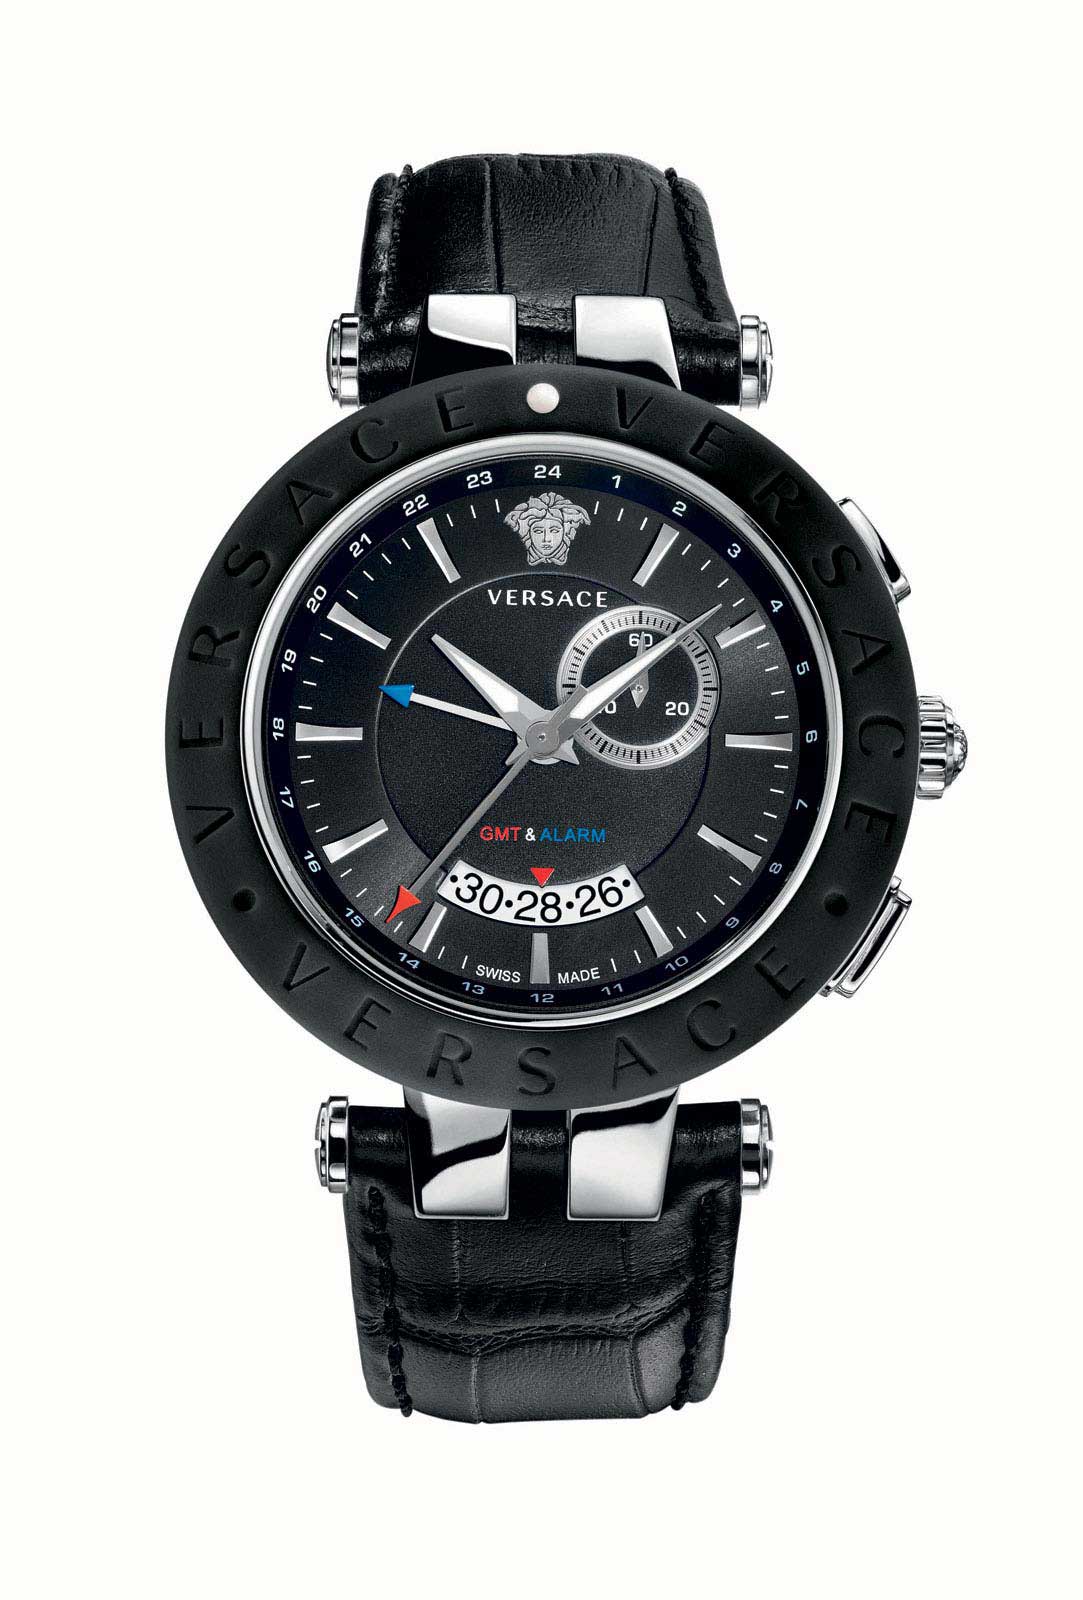 Versace QUARTZ GMT watch 8176-1990 STEEL